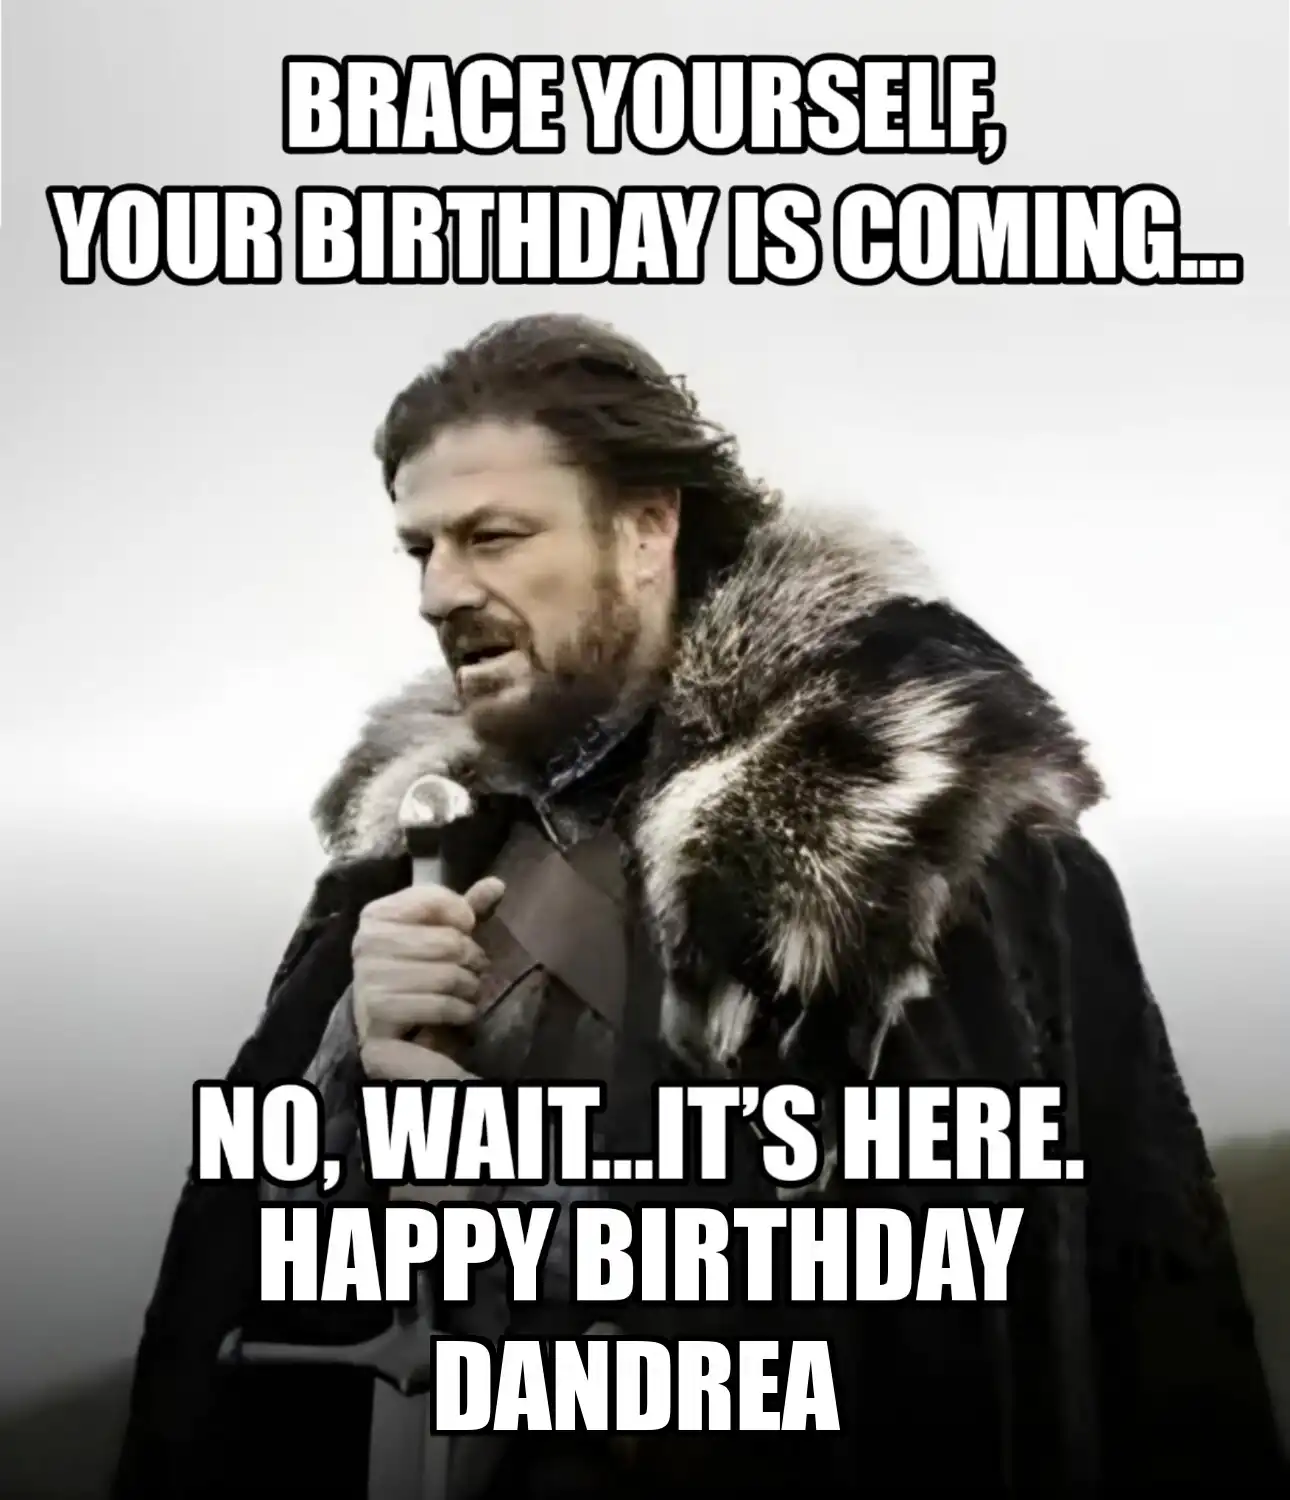 Happy Birthday Dandrea Brace Yourself Your Birthday Is Coming Meme